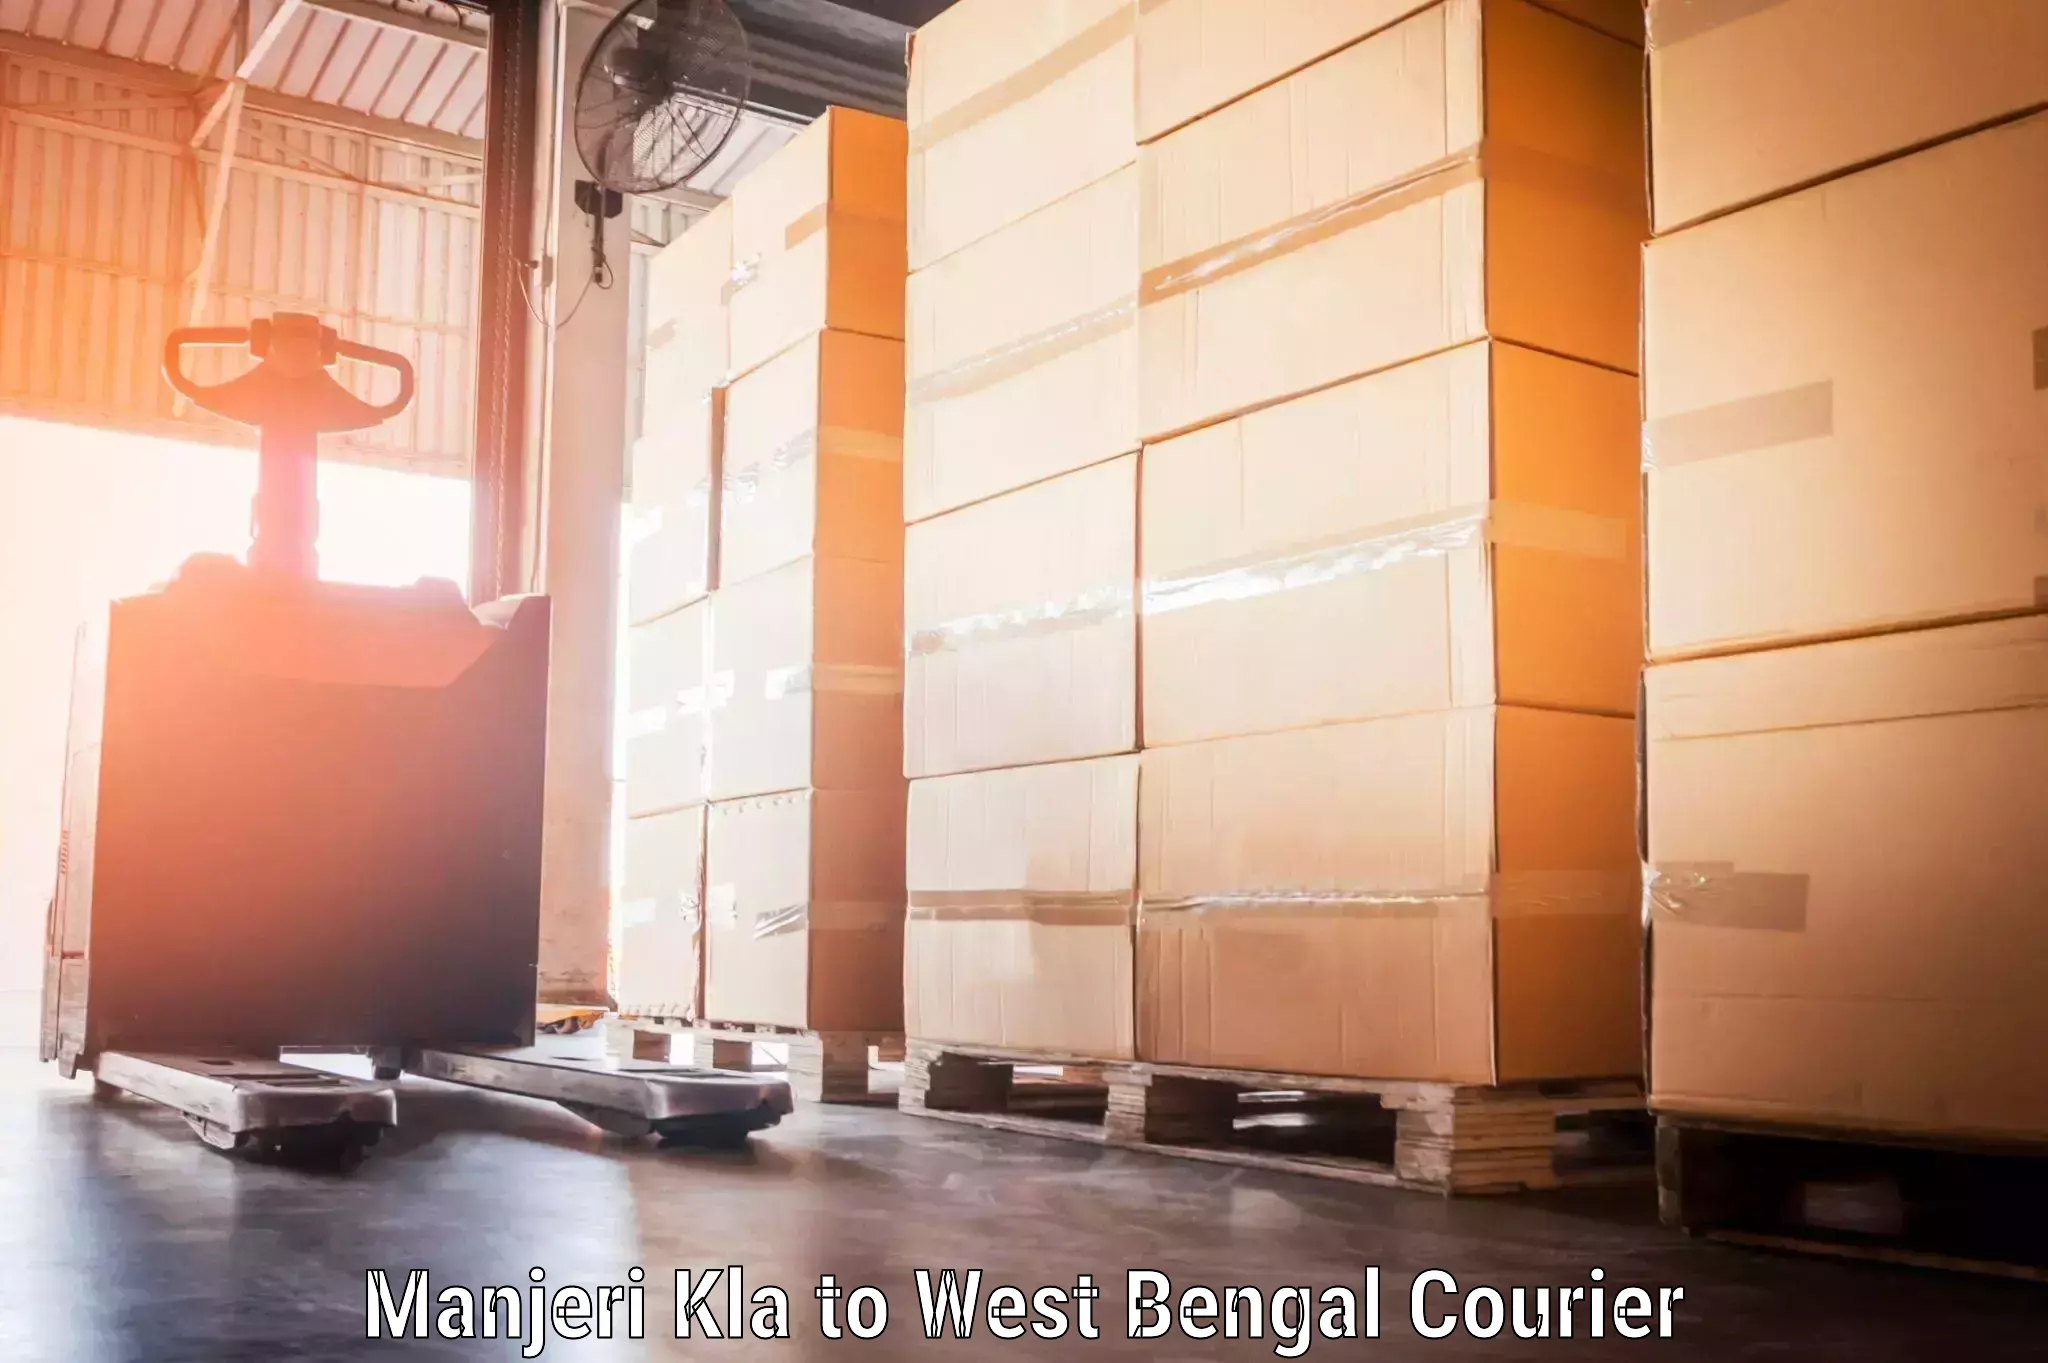 Baggage relocation service Manjeri Kla to West Bengal